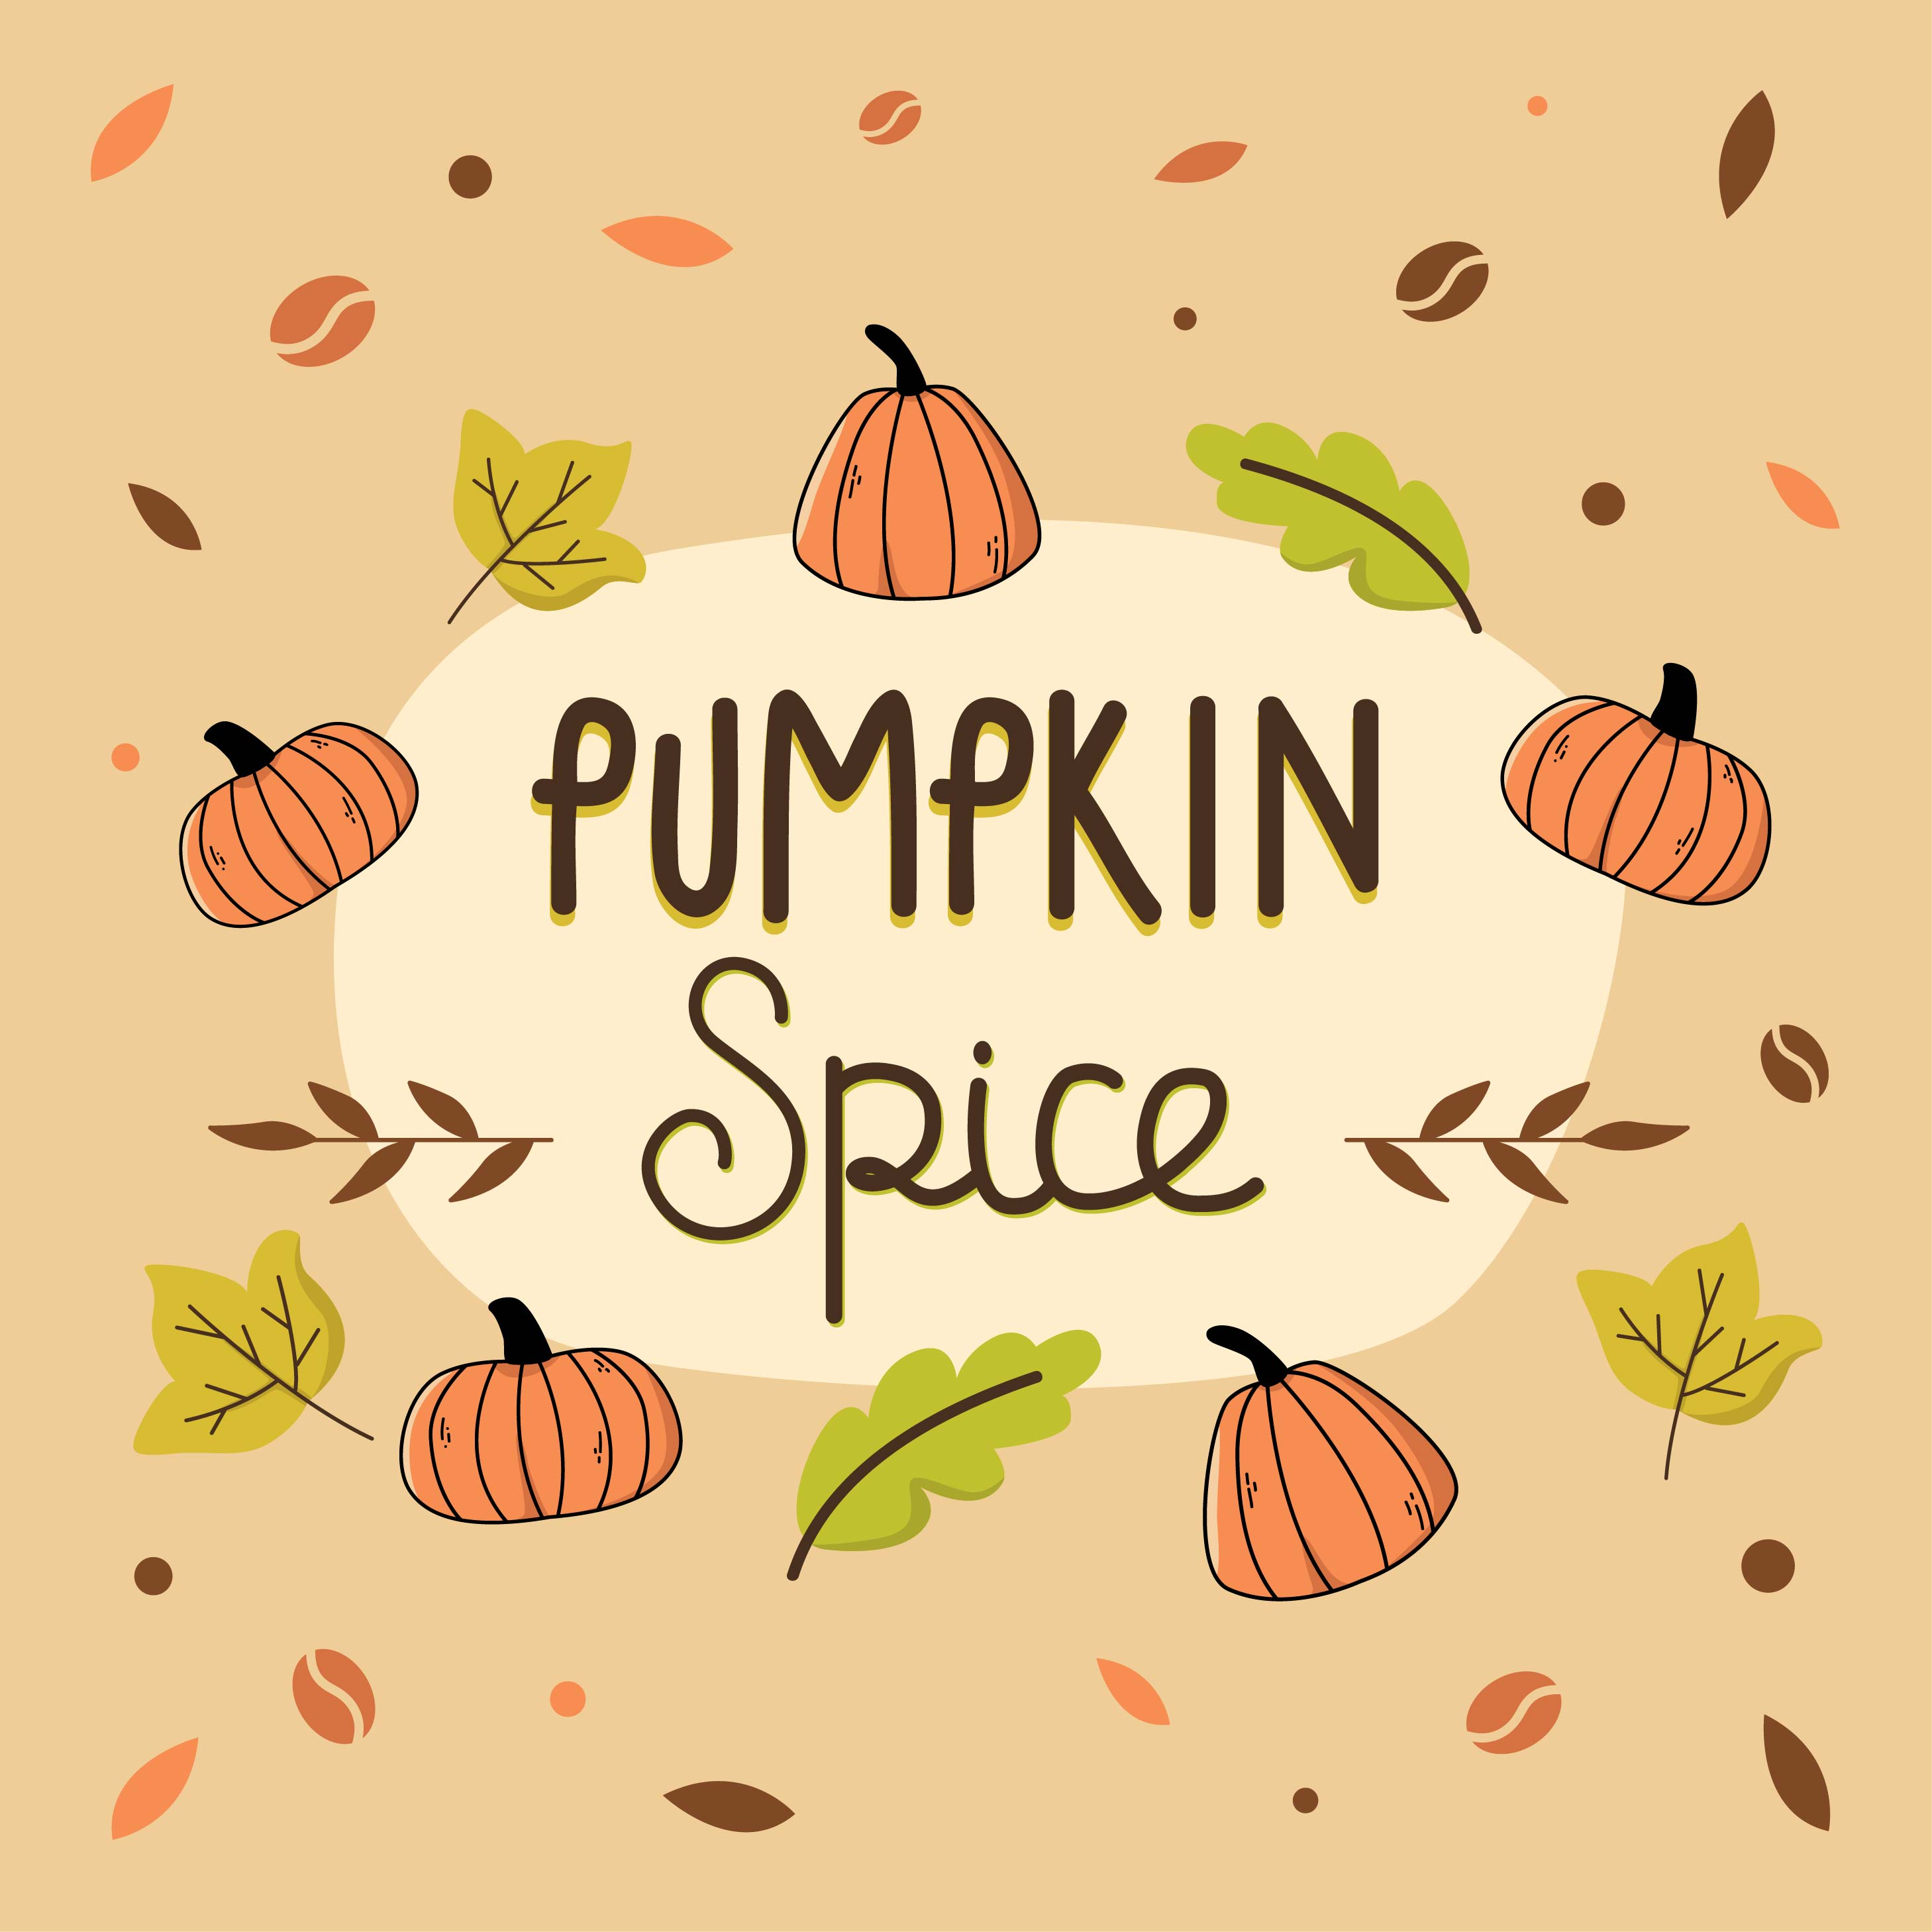 Download Pumpkin Spice Illustration for free.